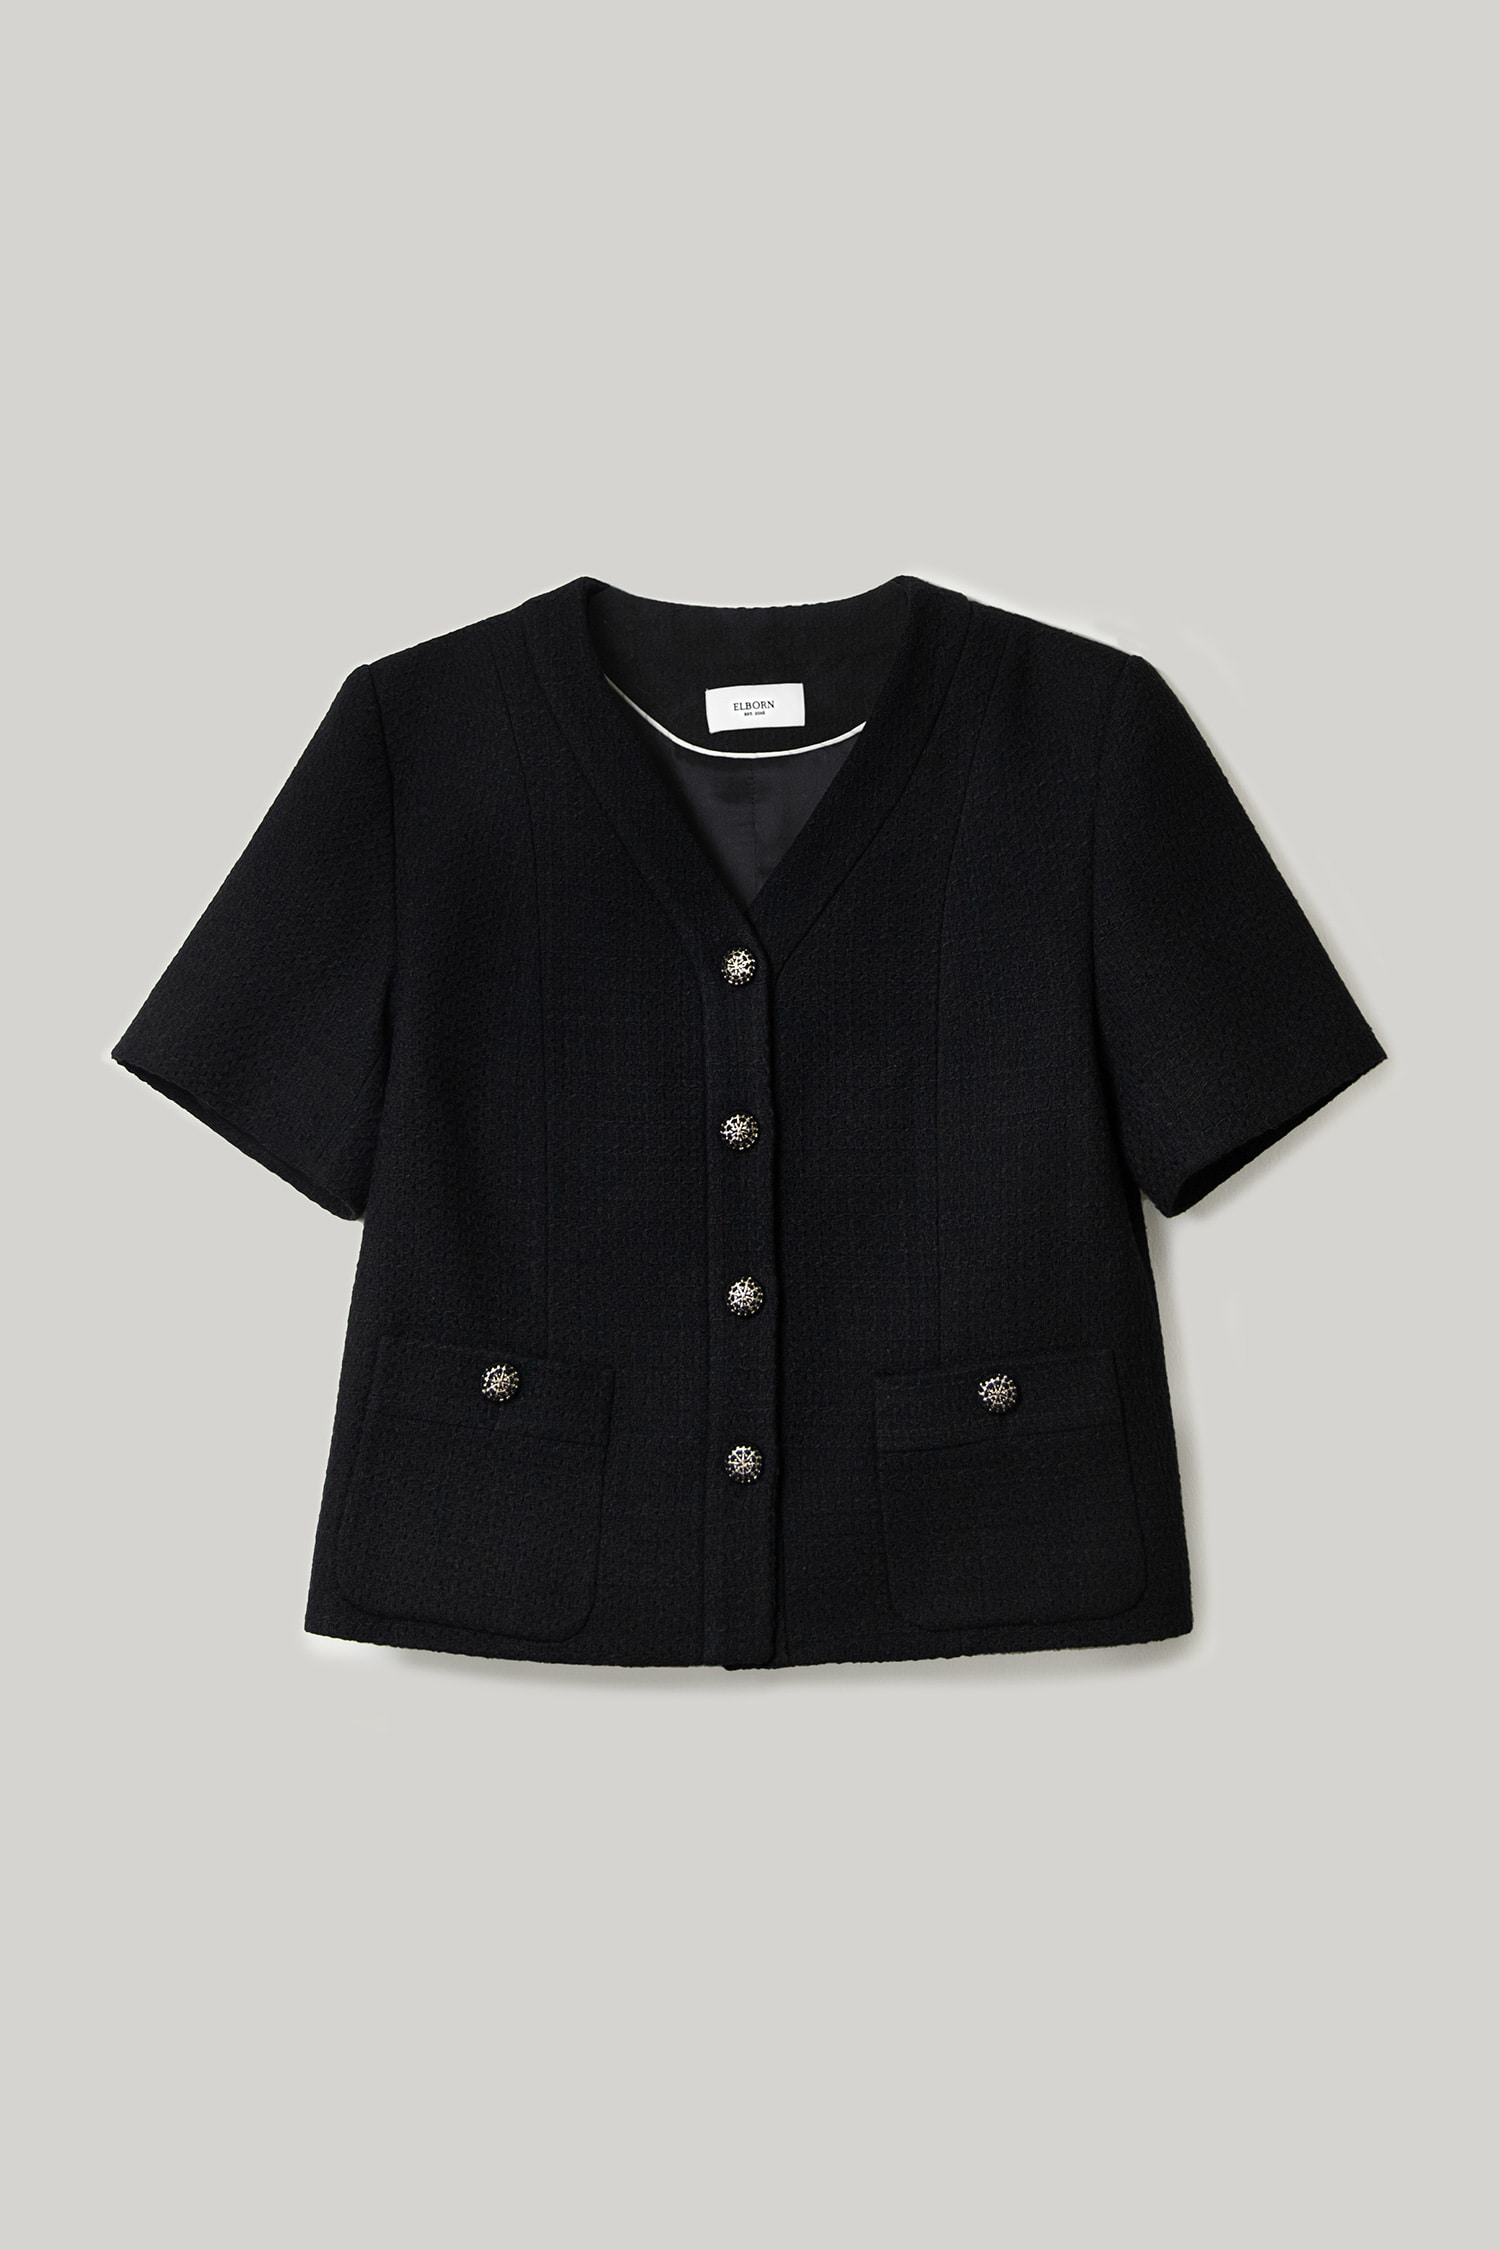 L&#039;avenue Summer Tweed Jacket (2 colros)